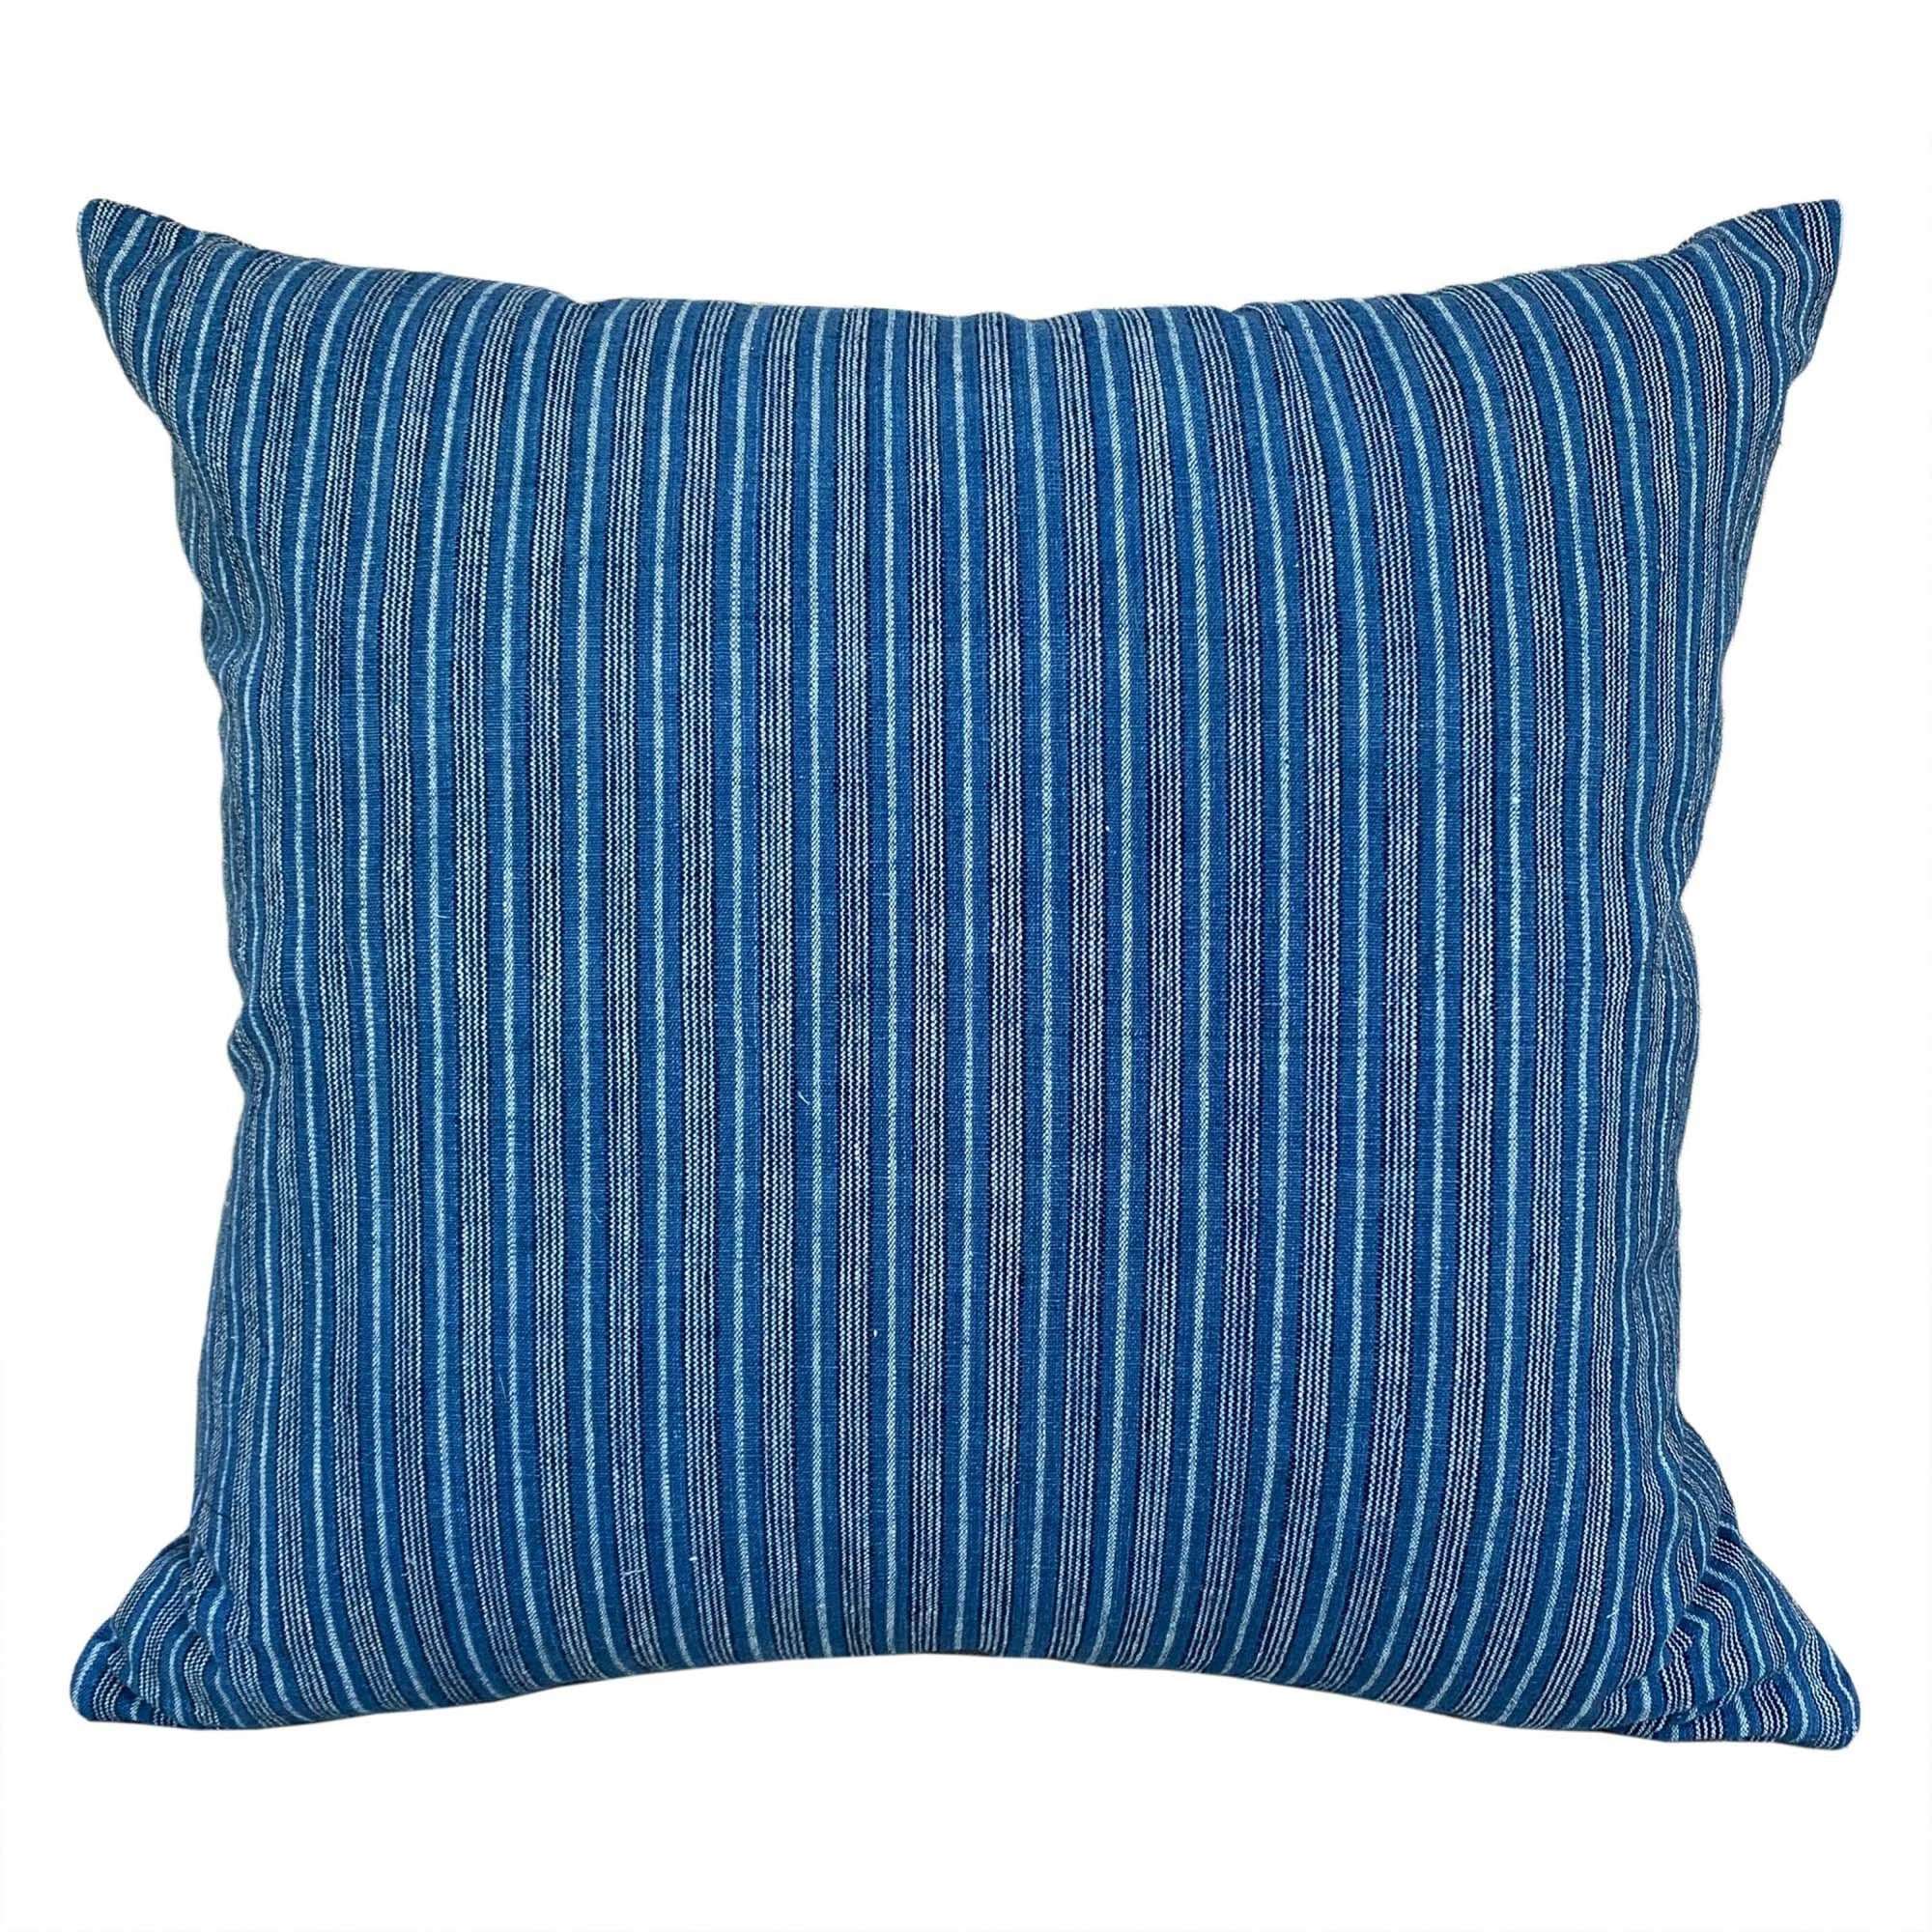 Songjiang cushions, light blue